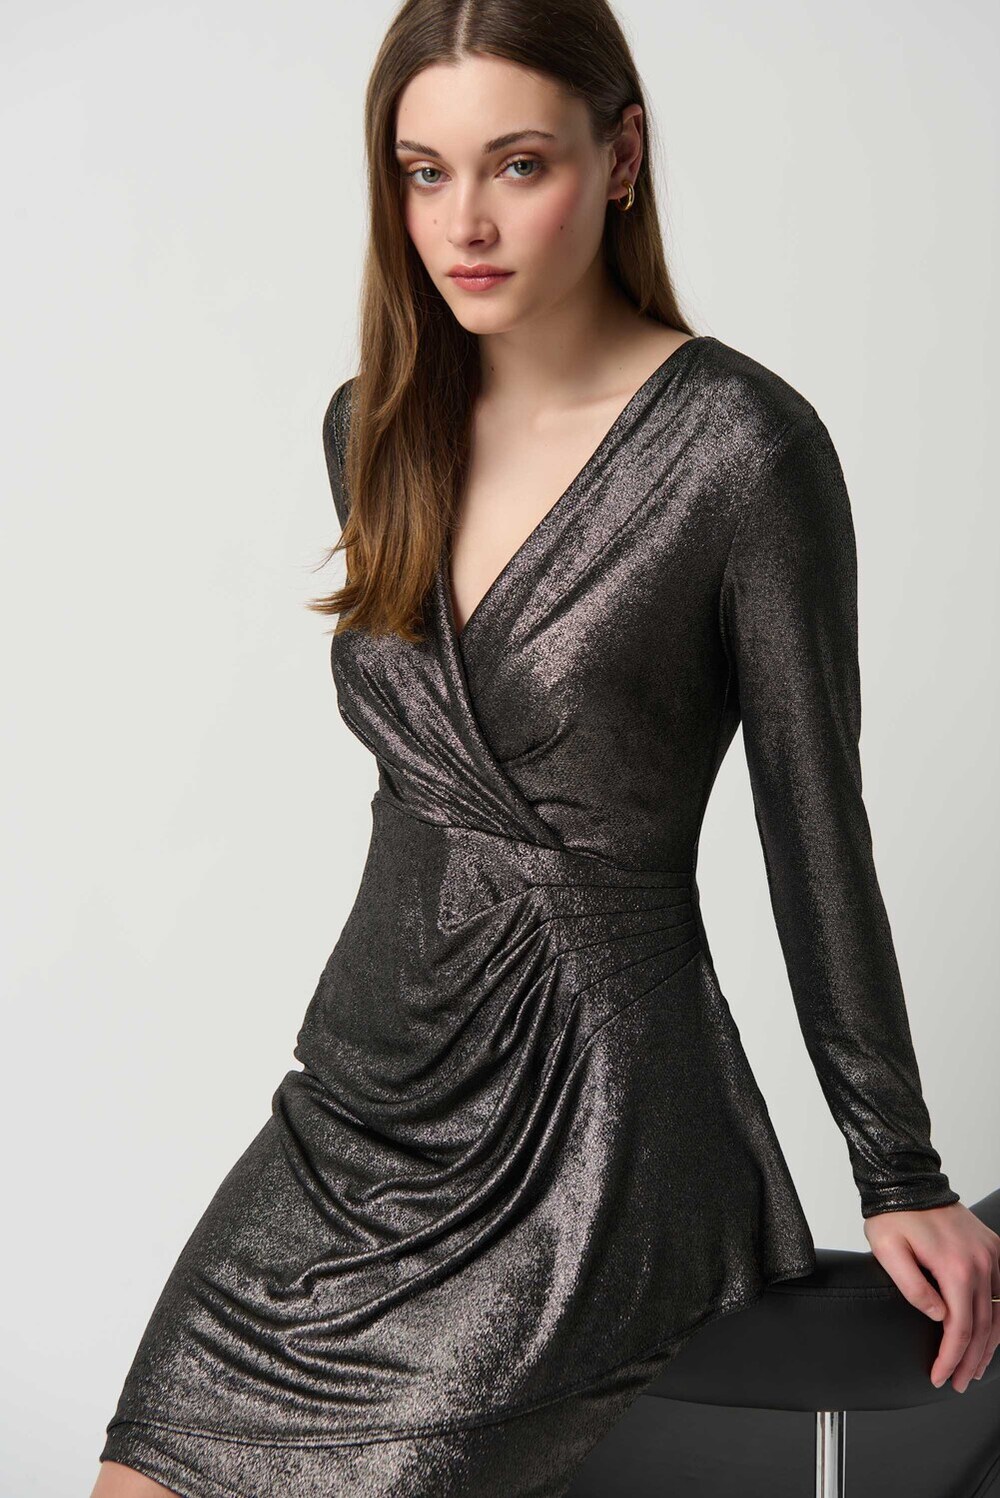 Metallic Wrap Front Dress Style 234124